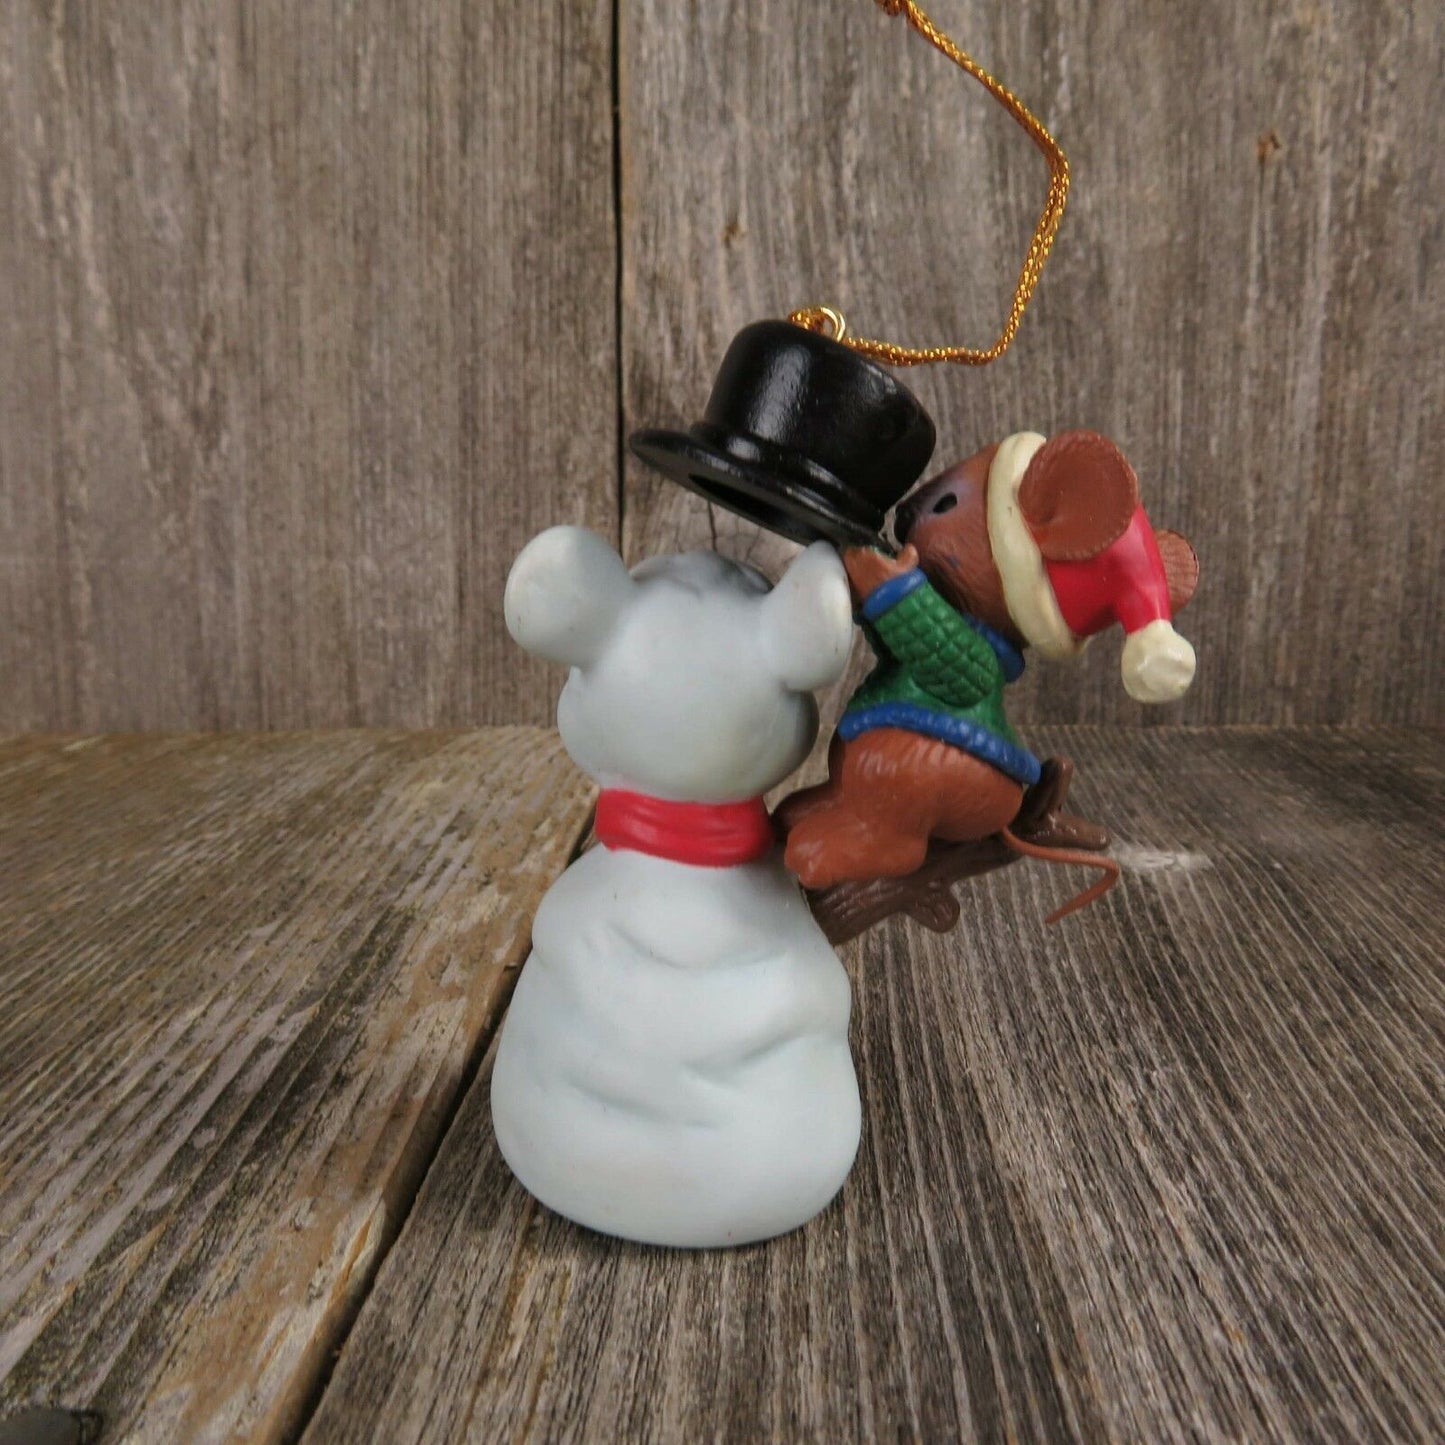 Snowman Mouse Mice Ornament Vintage Top Hat Dressing Building Enesco Lustre Fame - At Grandma's Table